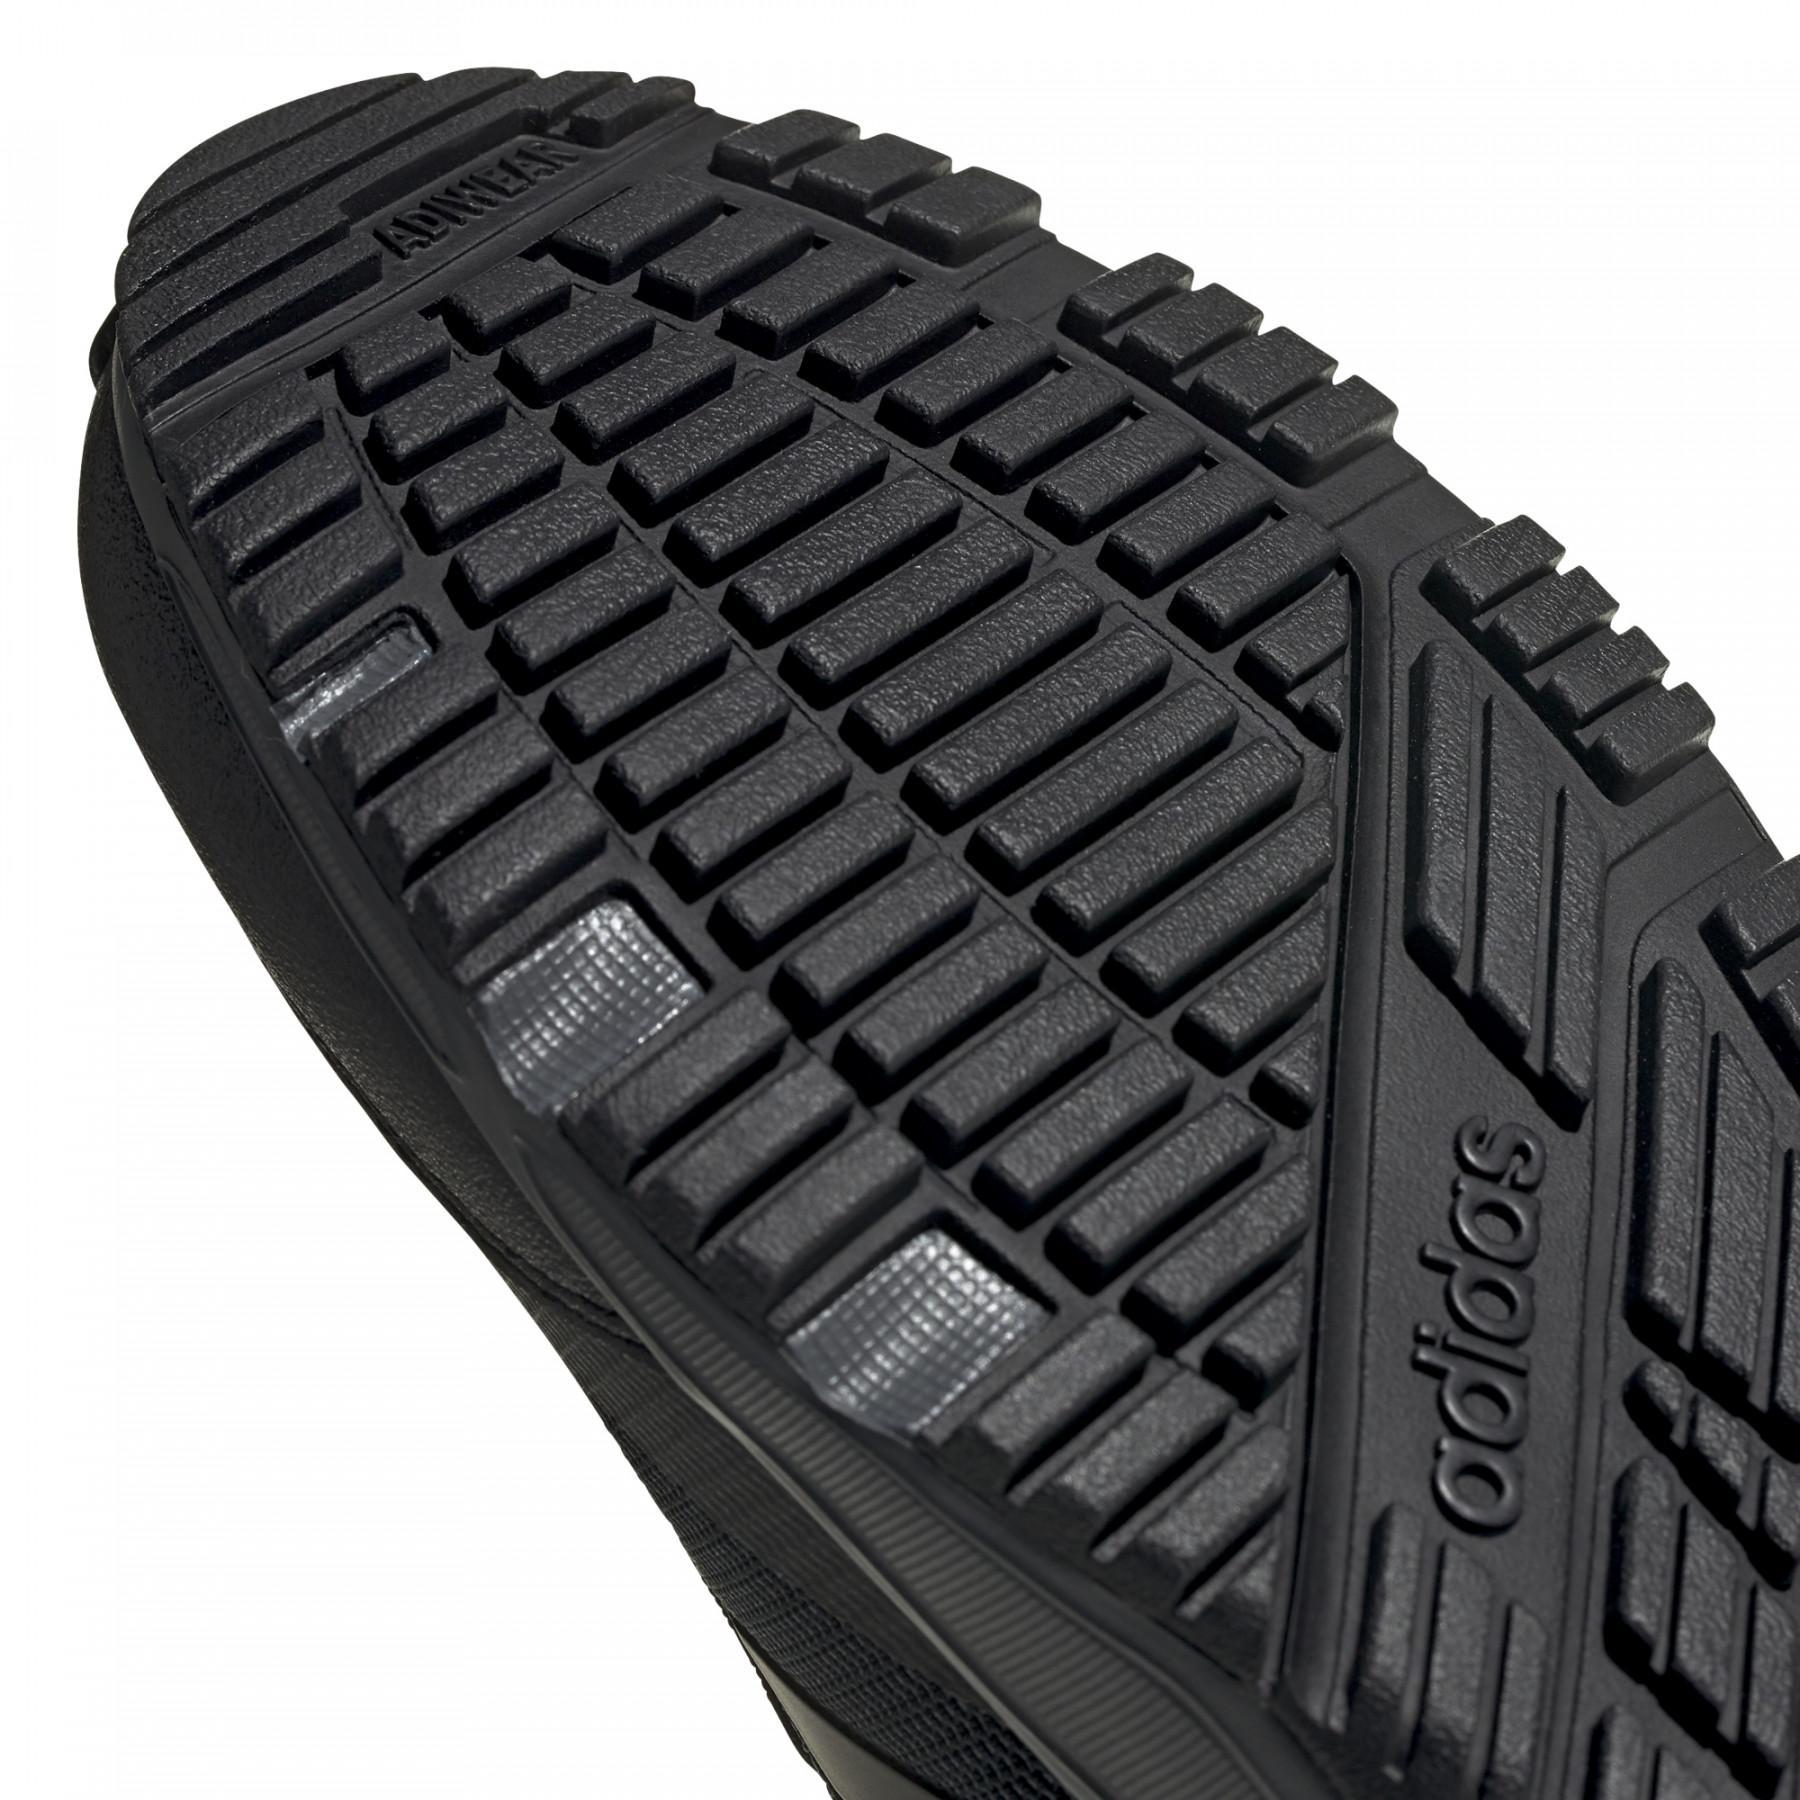 Chaussures de running adidas Rockadia Trail 3.0